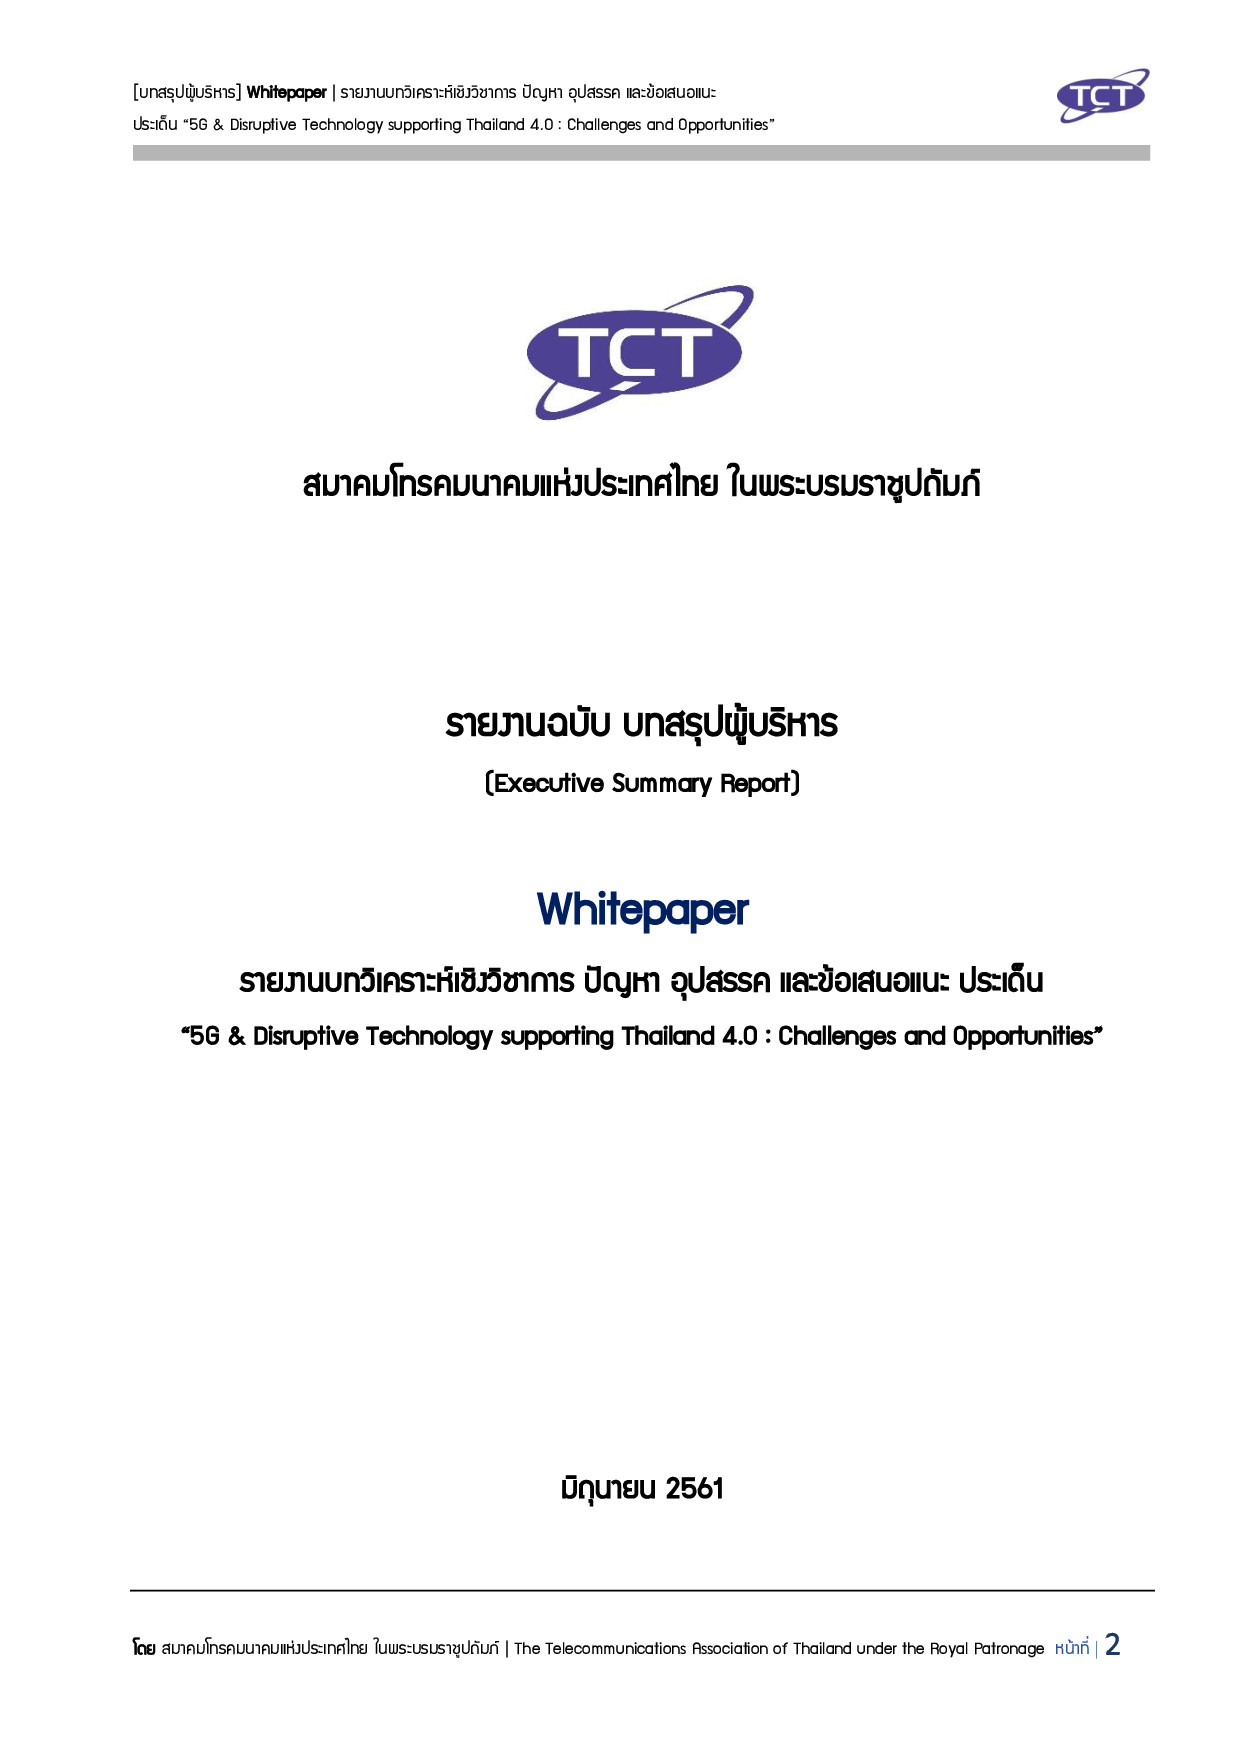 ExSum Report 5G Thai final v20 final submit p002